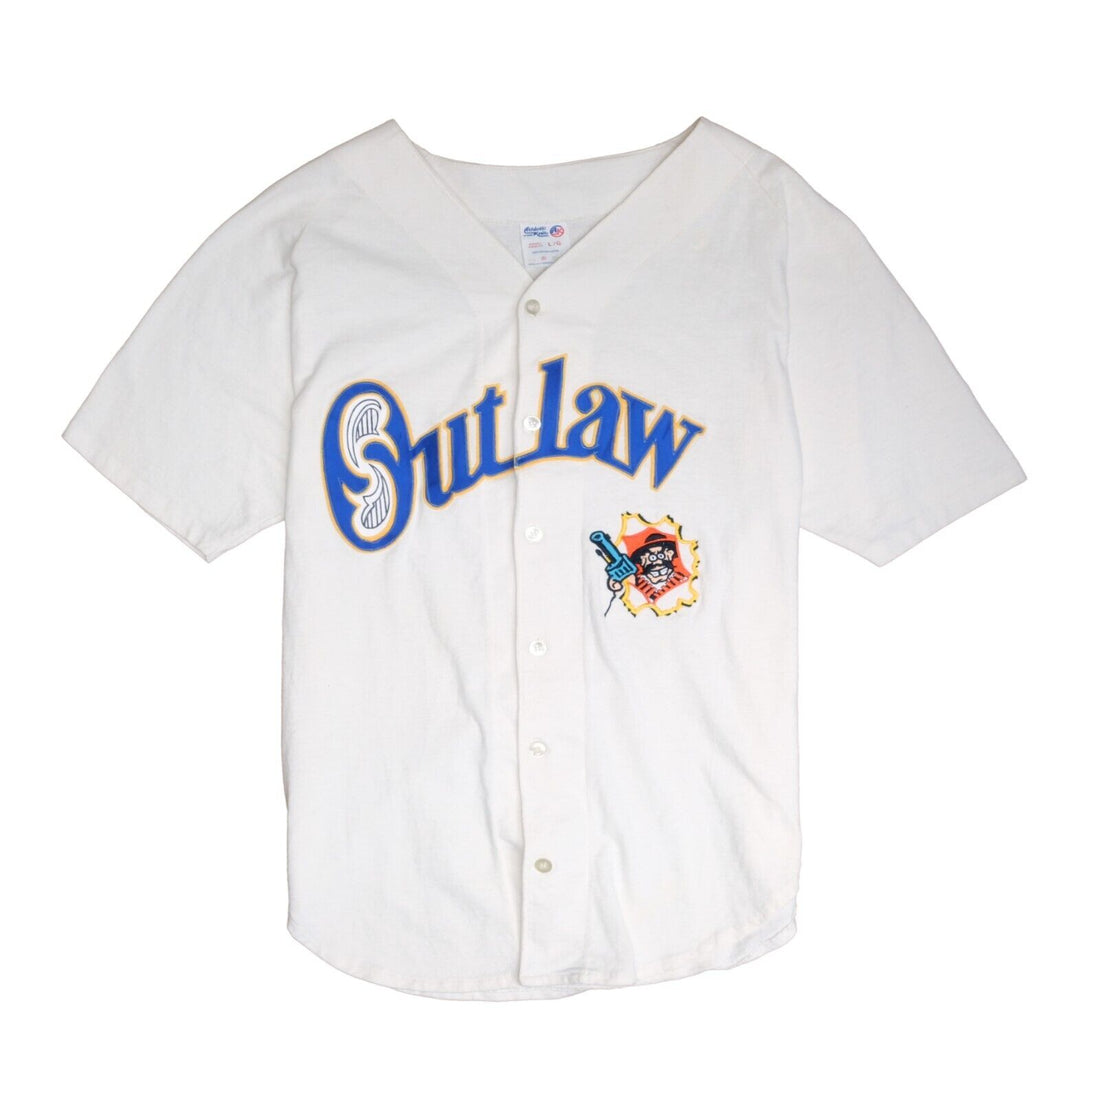 Vintage Outlaw Baseball Jersey Size Large White